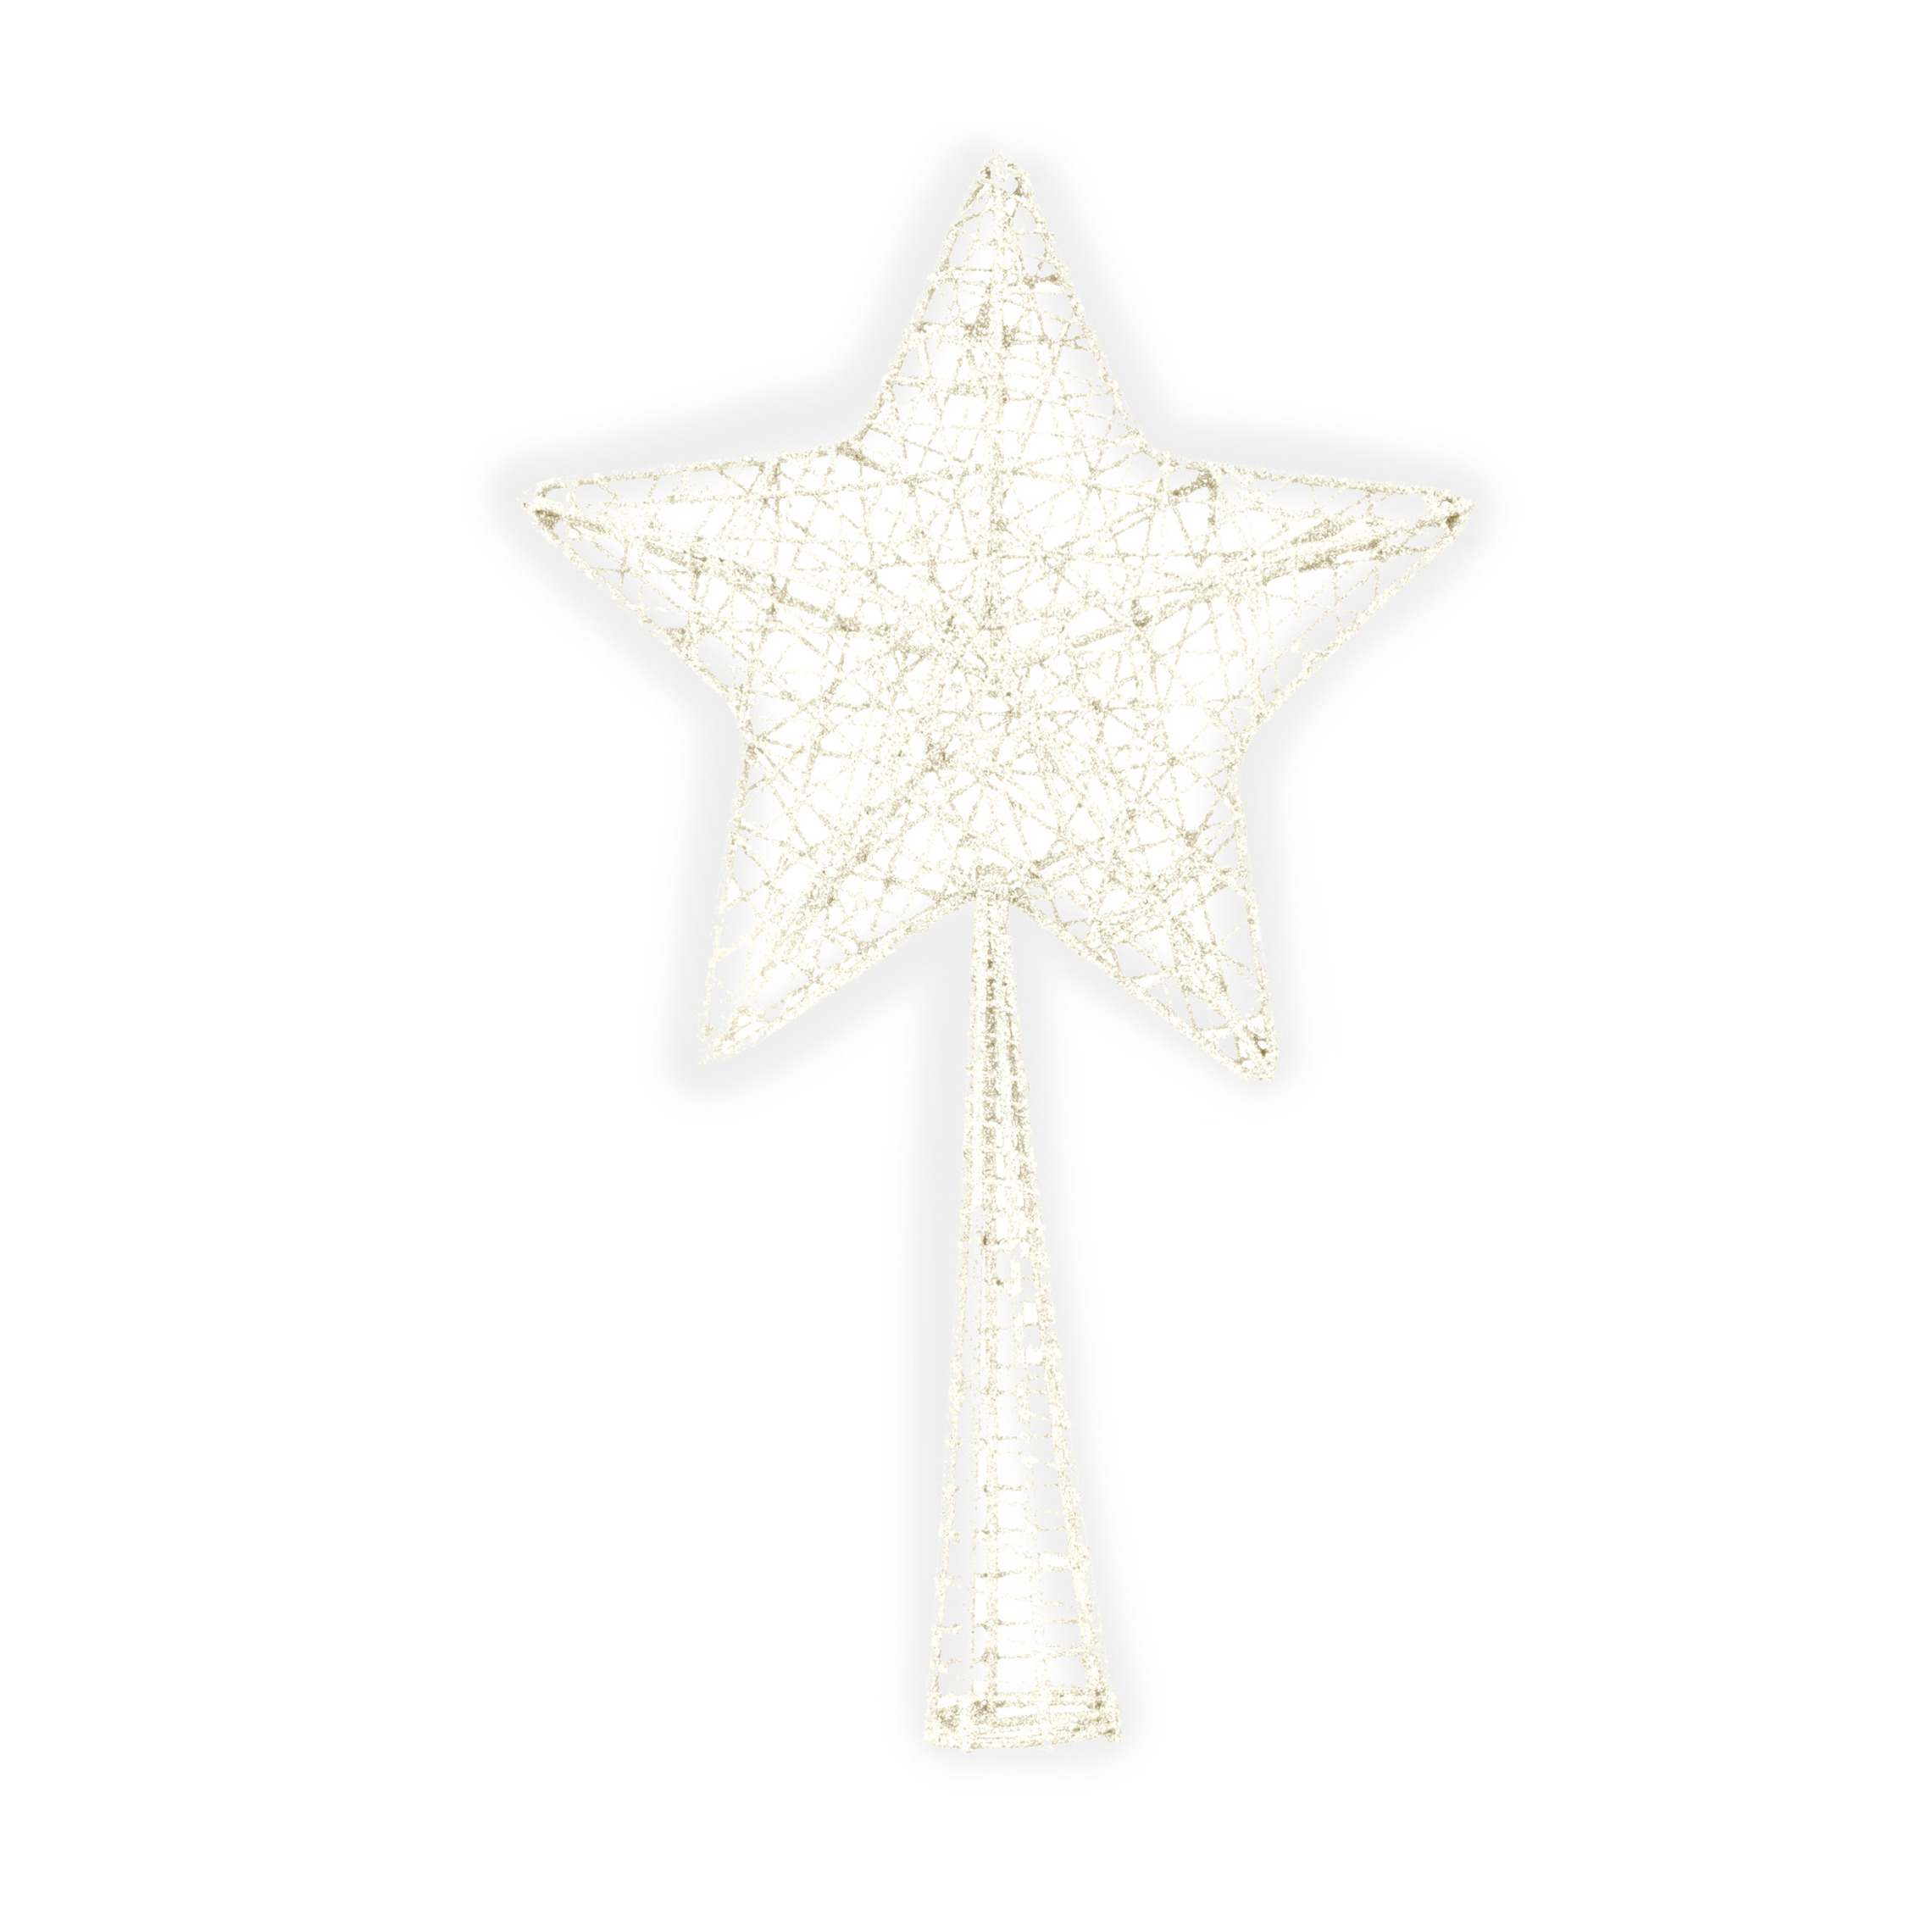 Kunststof ster piek/kerstboom topper glitter wit 28 cm -